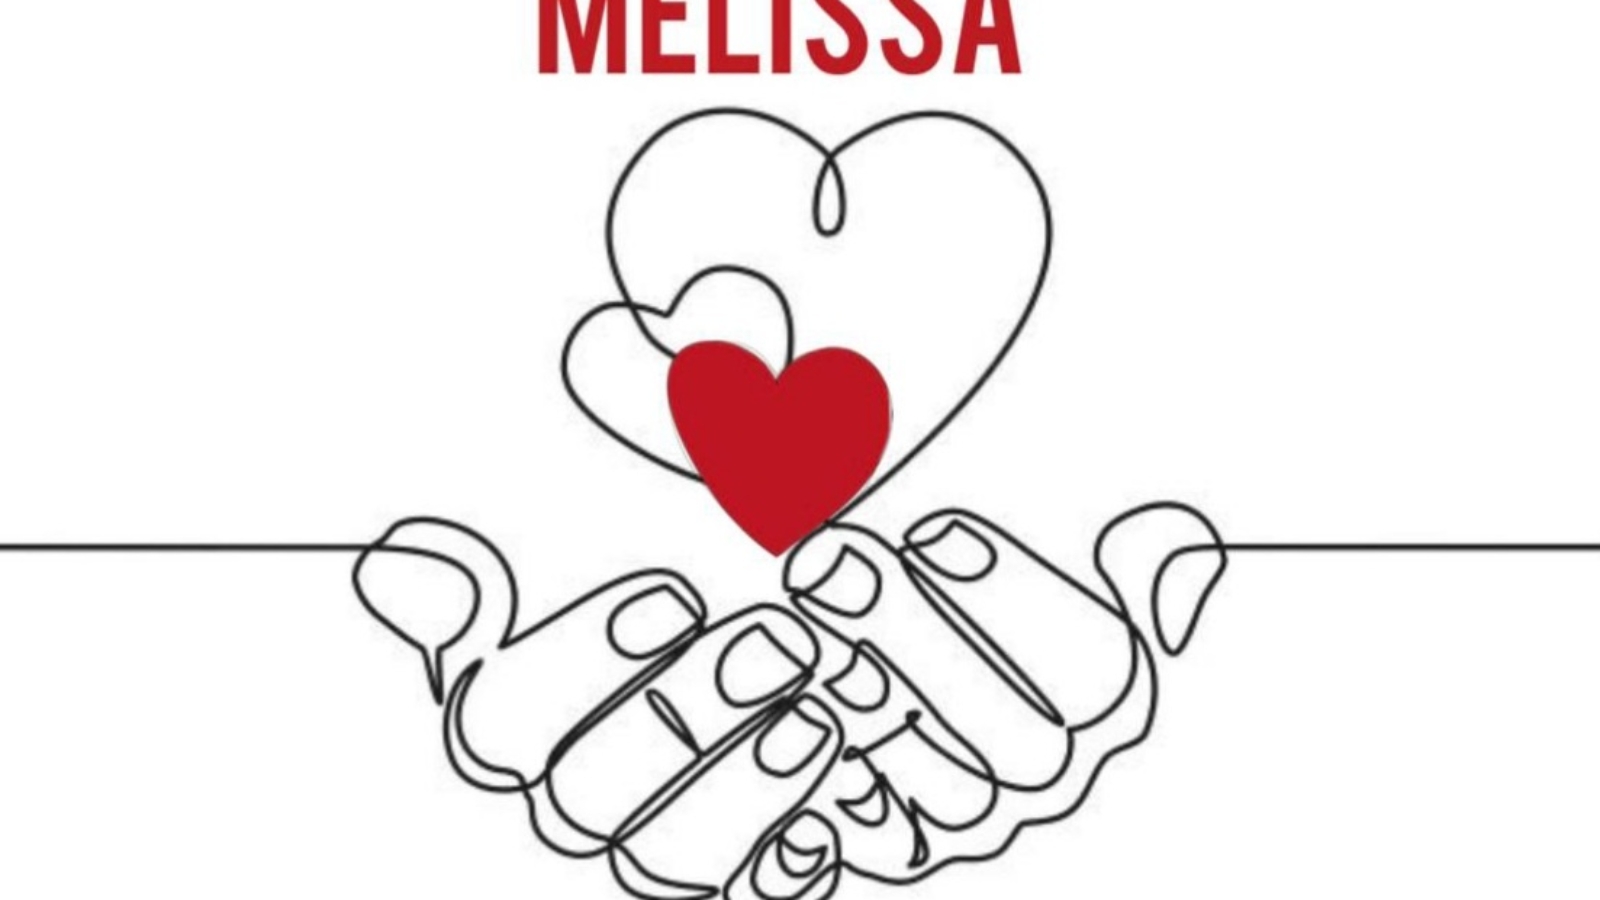 Melissa-manifesto